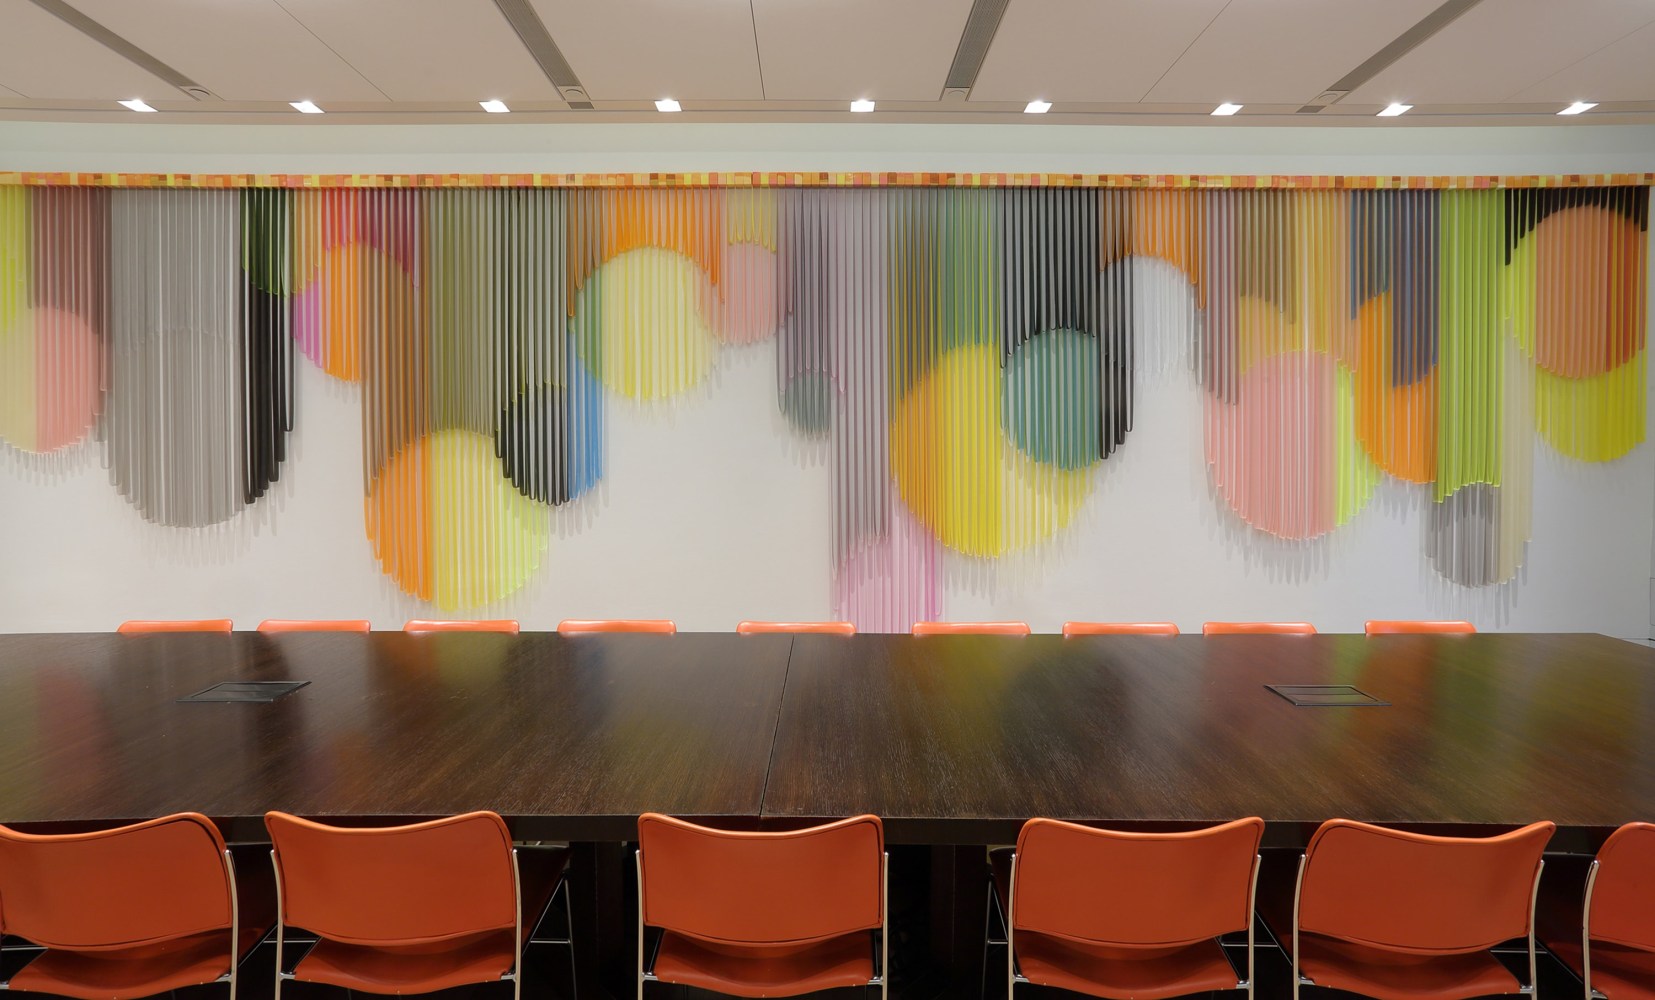 Eva LeWitt
Untitled (Fish House), 2019
Foam, latex and plastic
132 x 2 3/4 x 444 inches
(335.3 x 7 x 1127.8 cm)